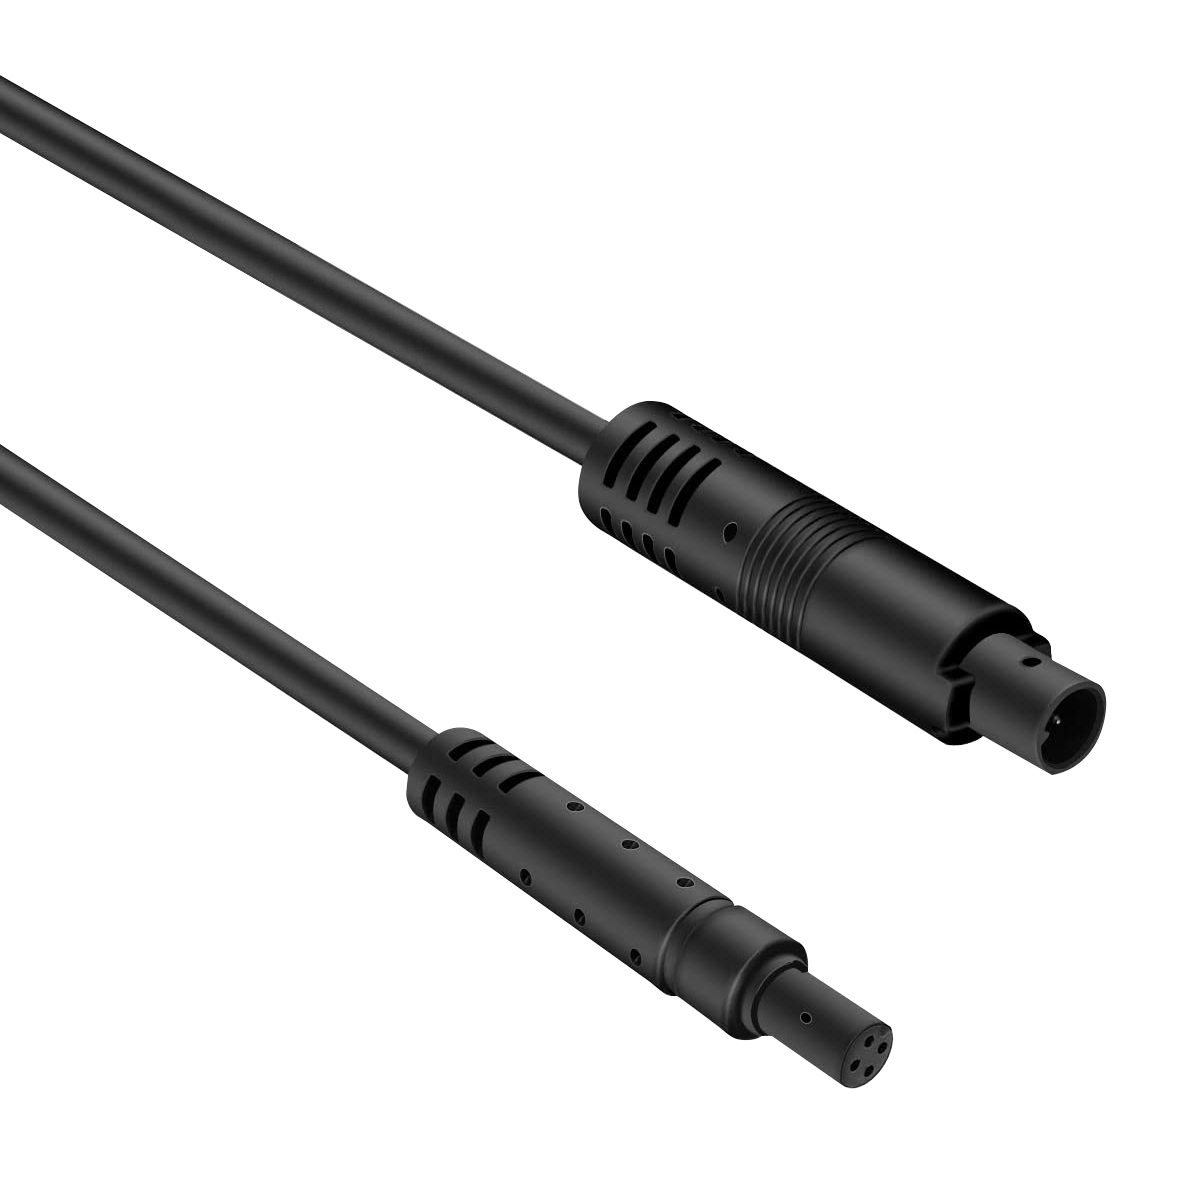 ApaxQ [CBL30] Car camera extension cable 4 pin 3M